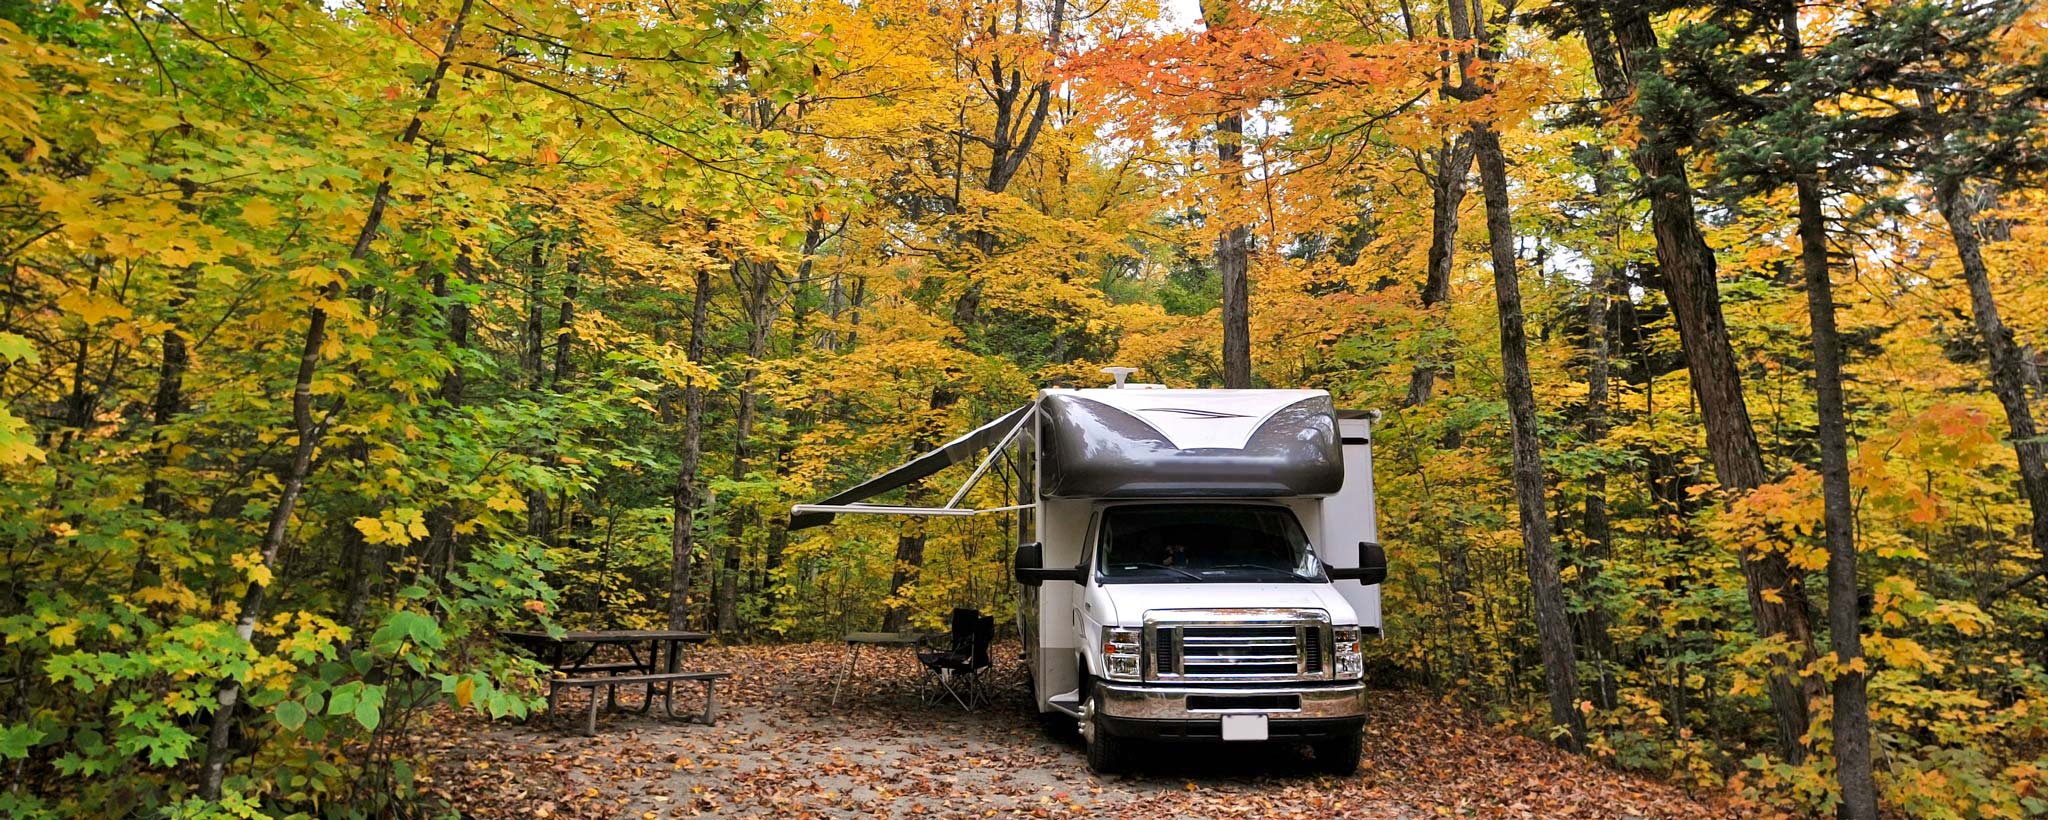 RV camping in fall foliage